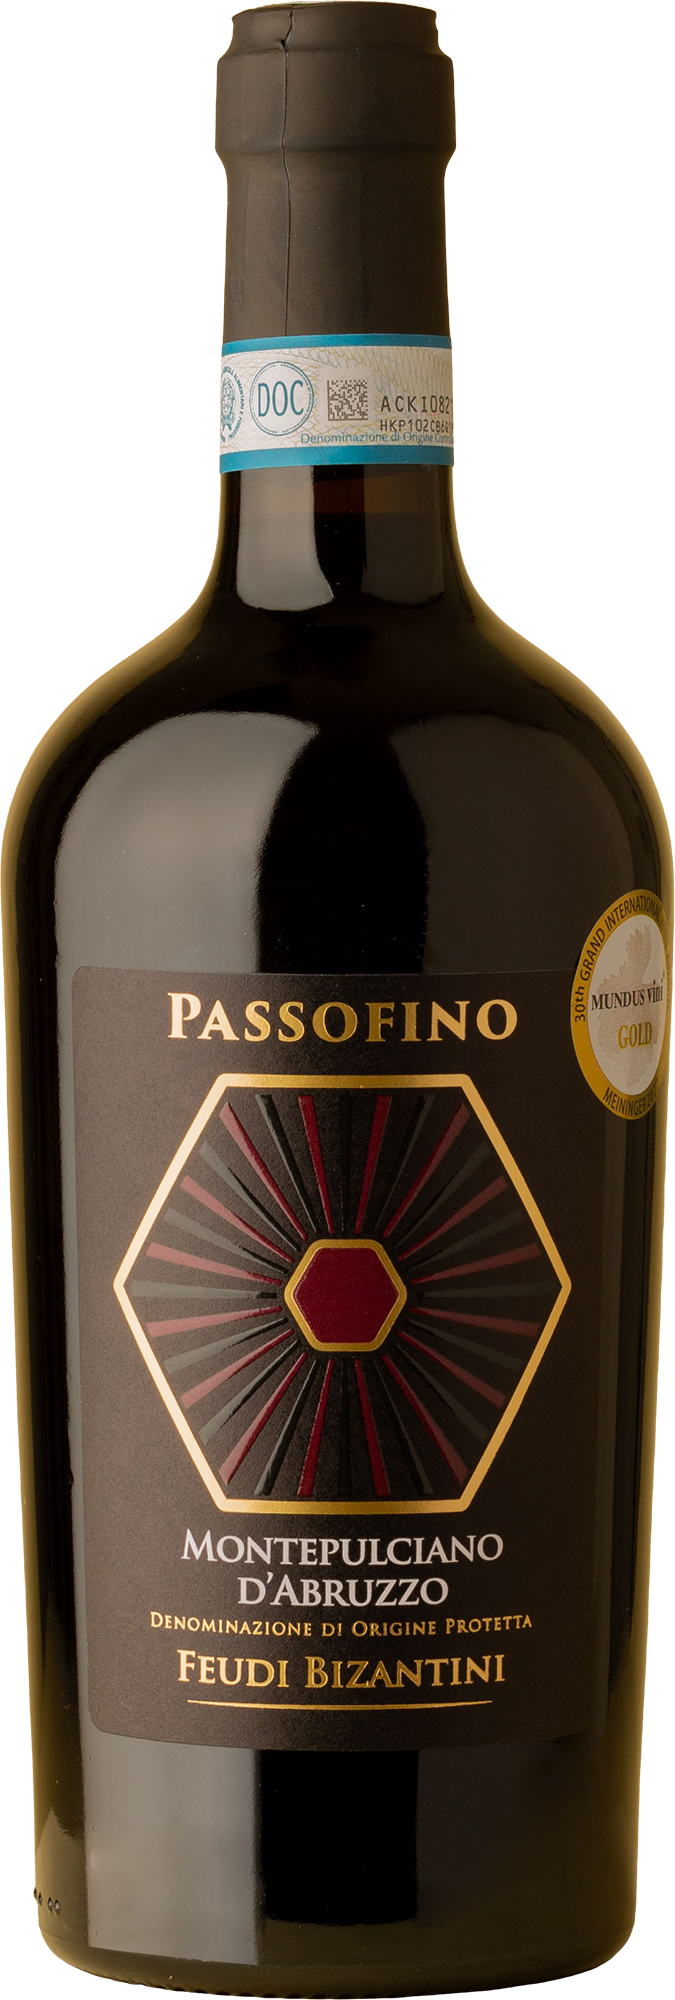 Feudi Bizantini - Passofino Montepulciano 2020 Red Wine